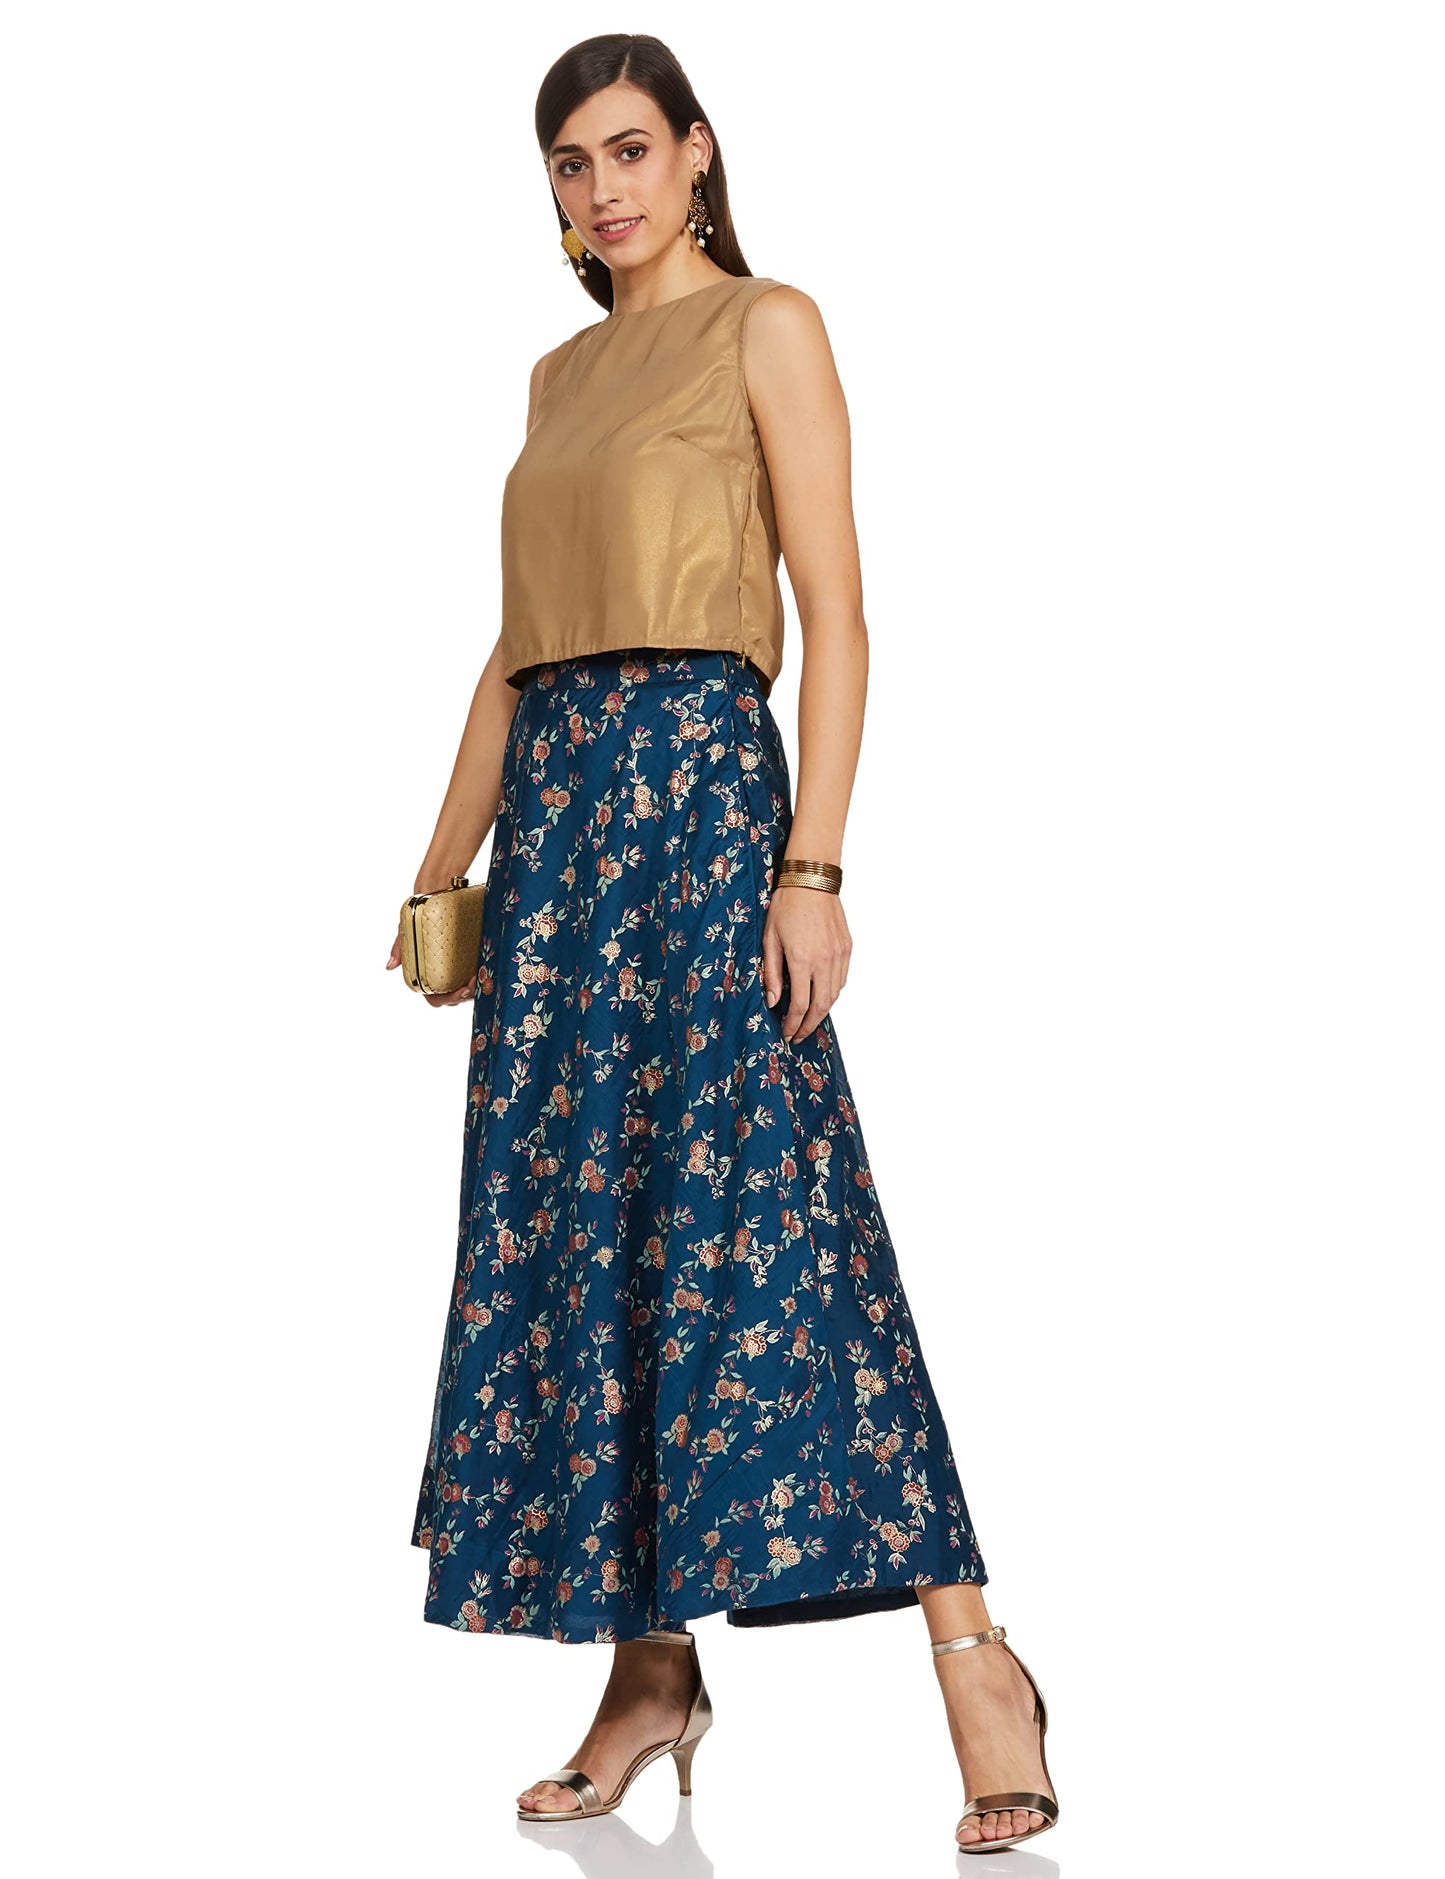 Global Desi Polyester A-Line Skirt